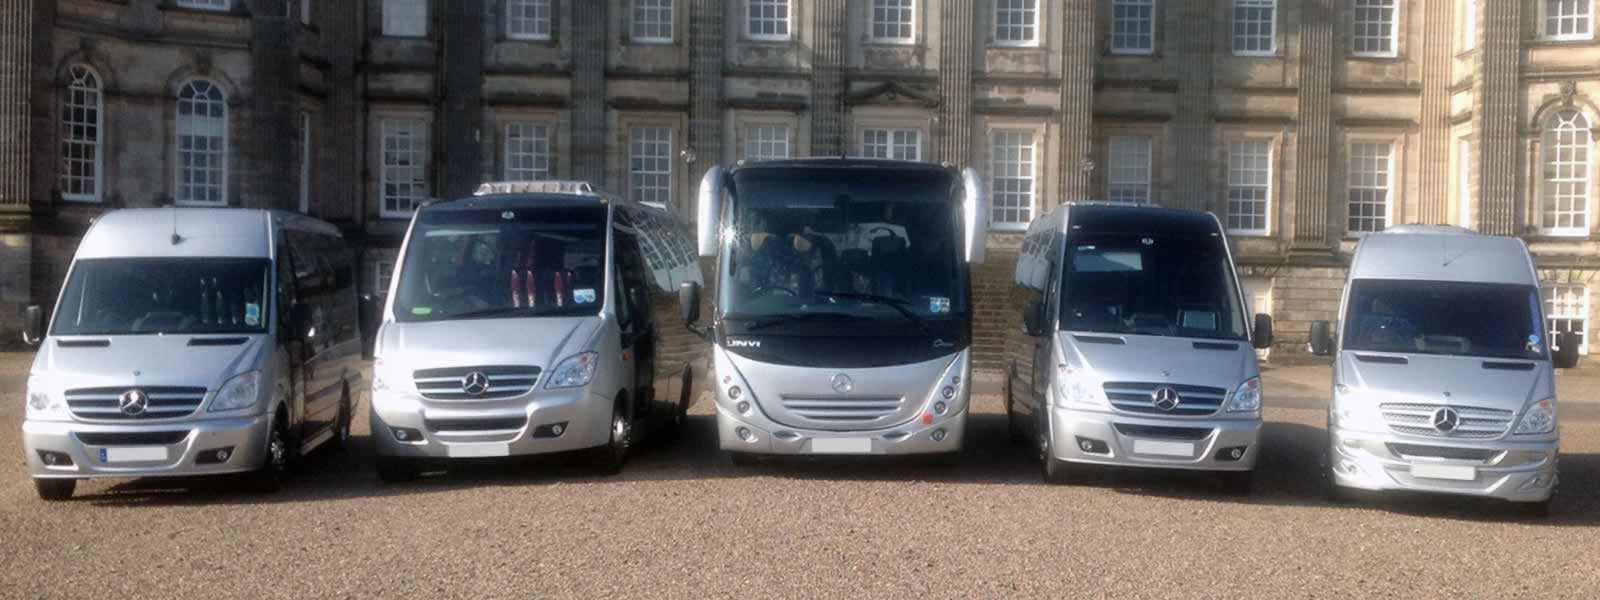 coach & minibus here vehicle lineup